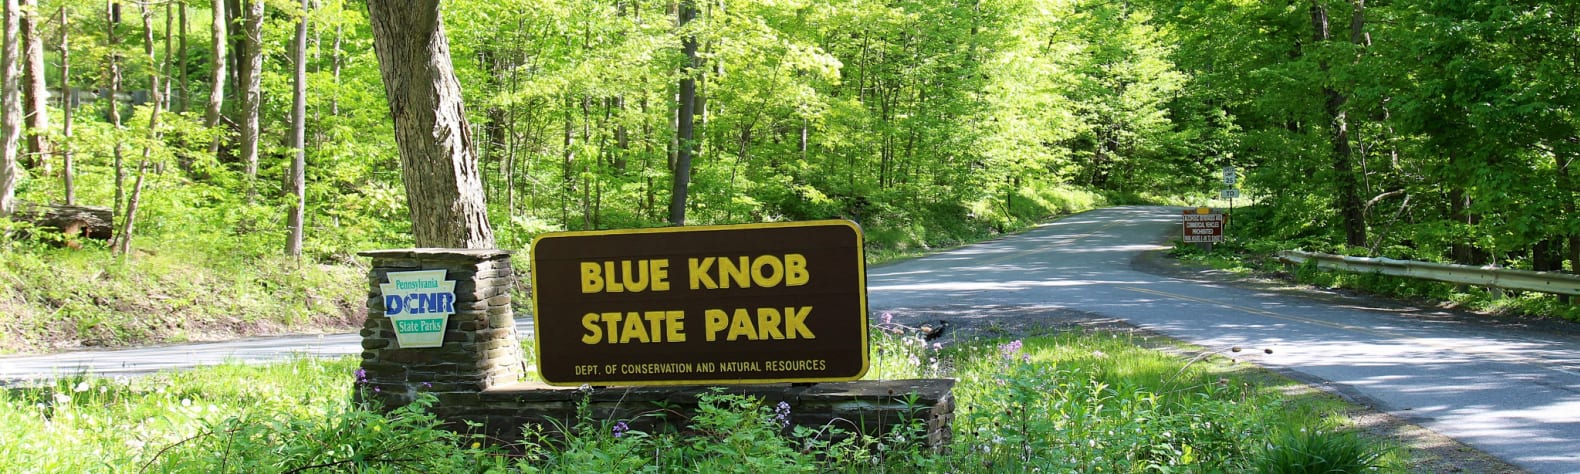 Blue Knob State Park